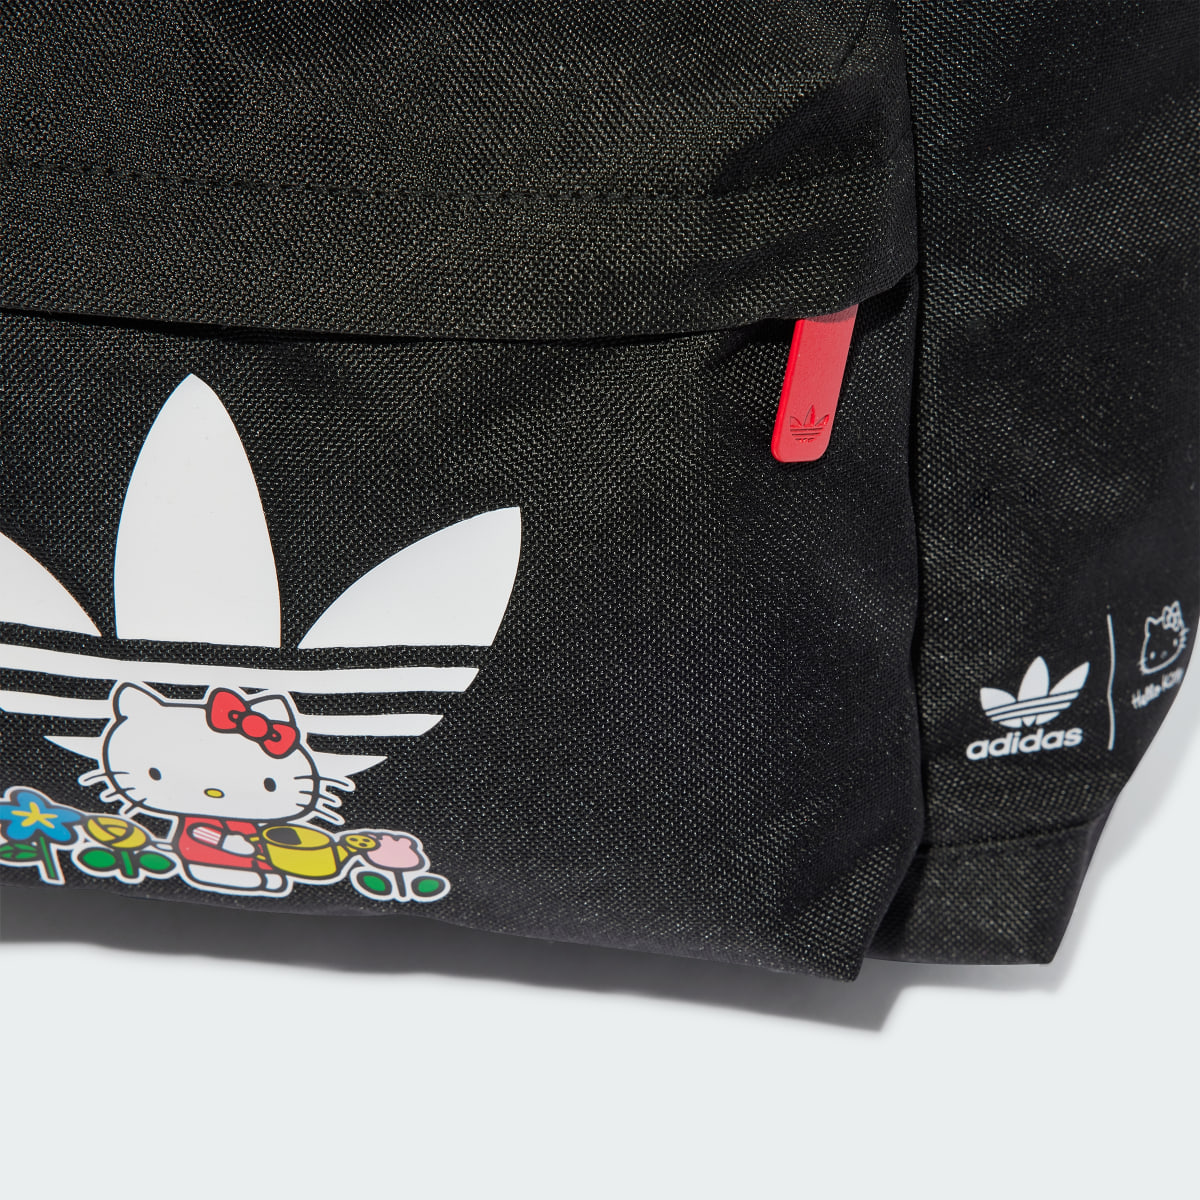 Adidas Mochila adidas x Hello Kitty (Bebé). 7